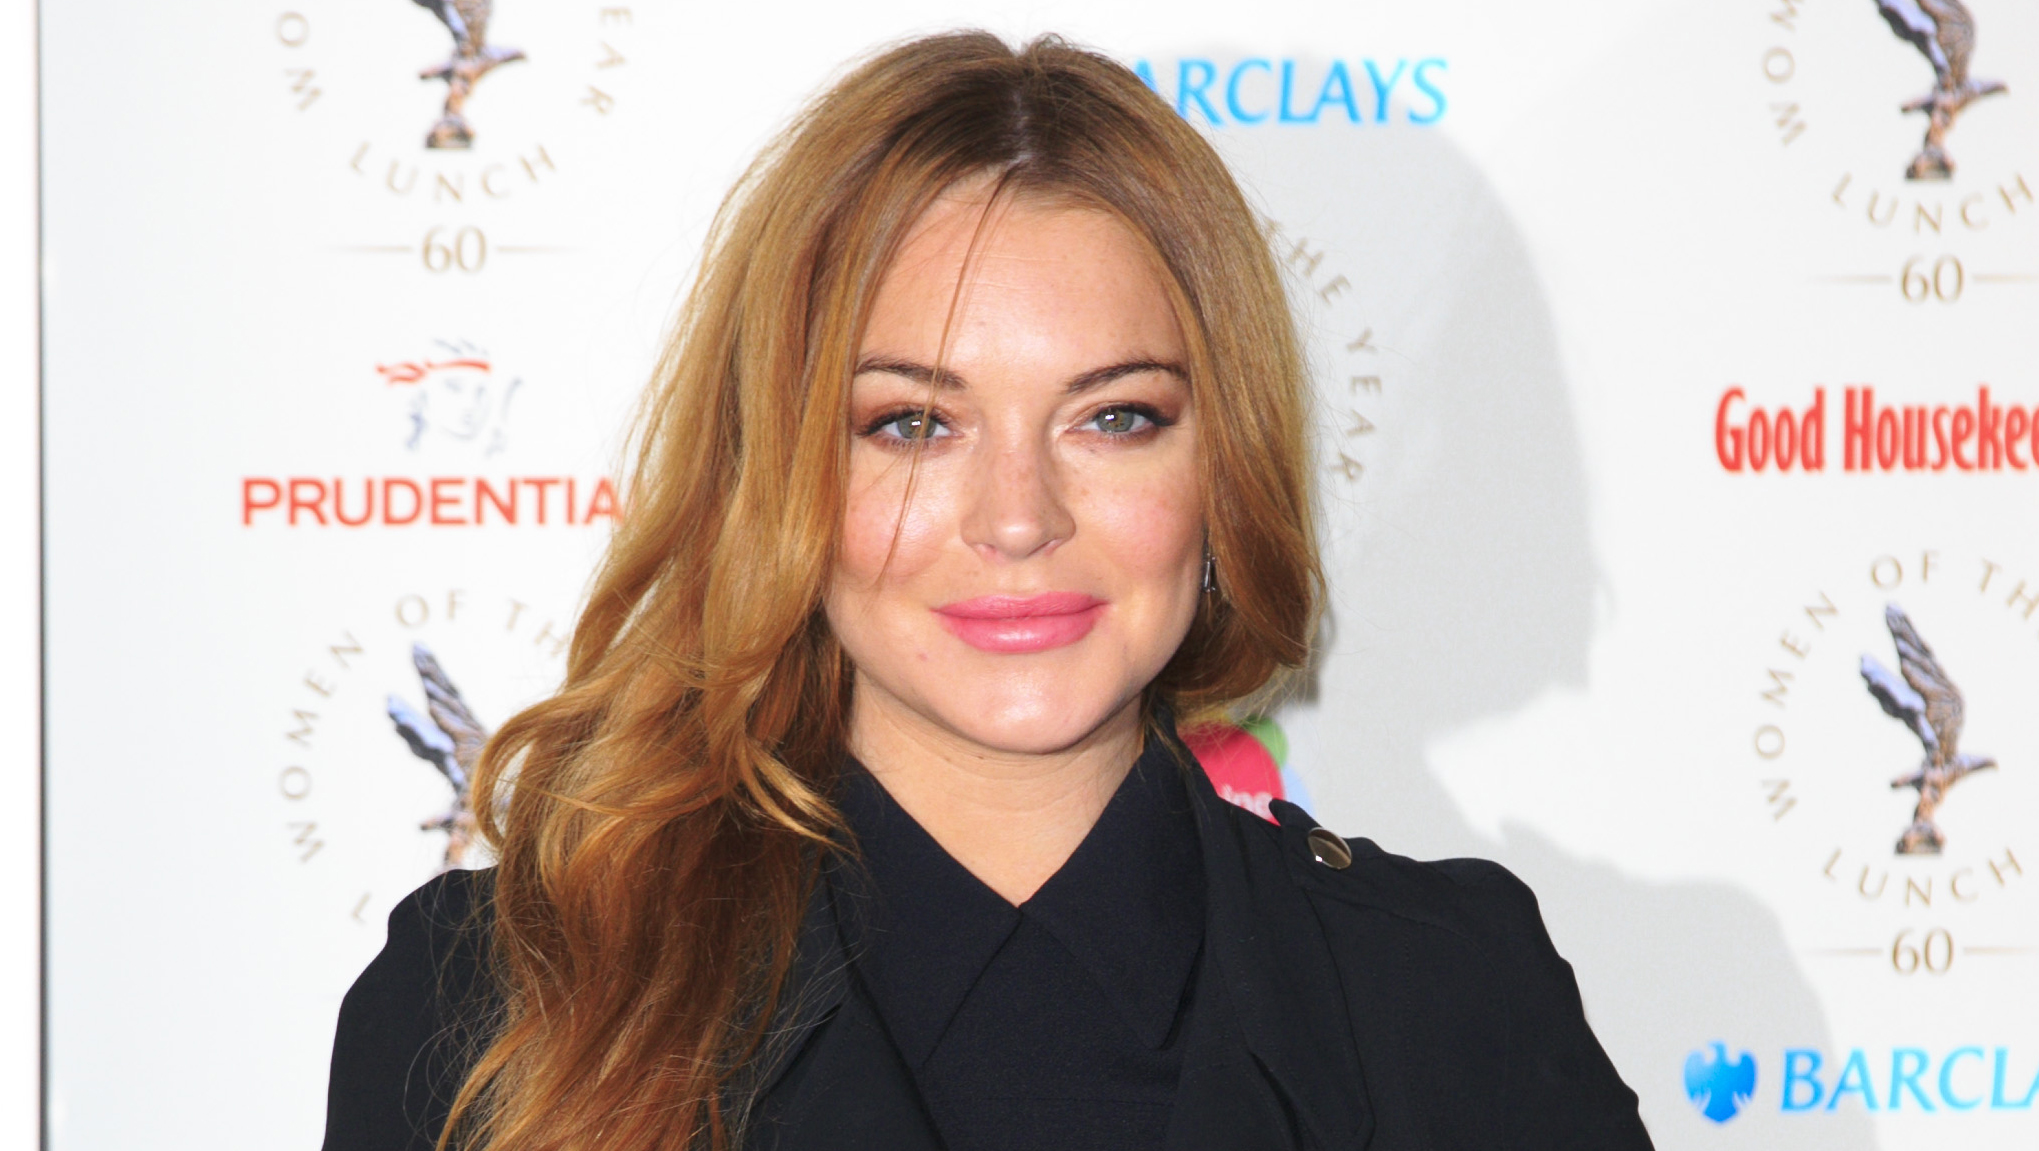 Lindsay Lohan Mother File Defamation Lawsuit Against Fox News Cbs News